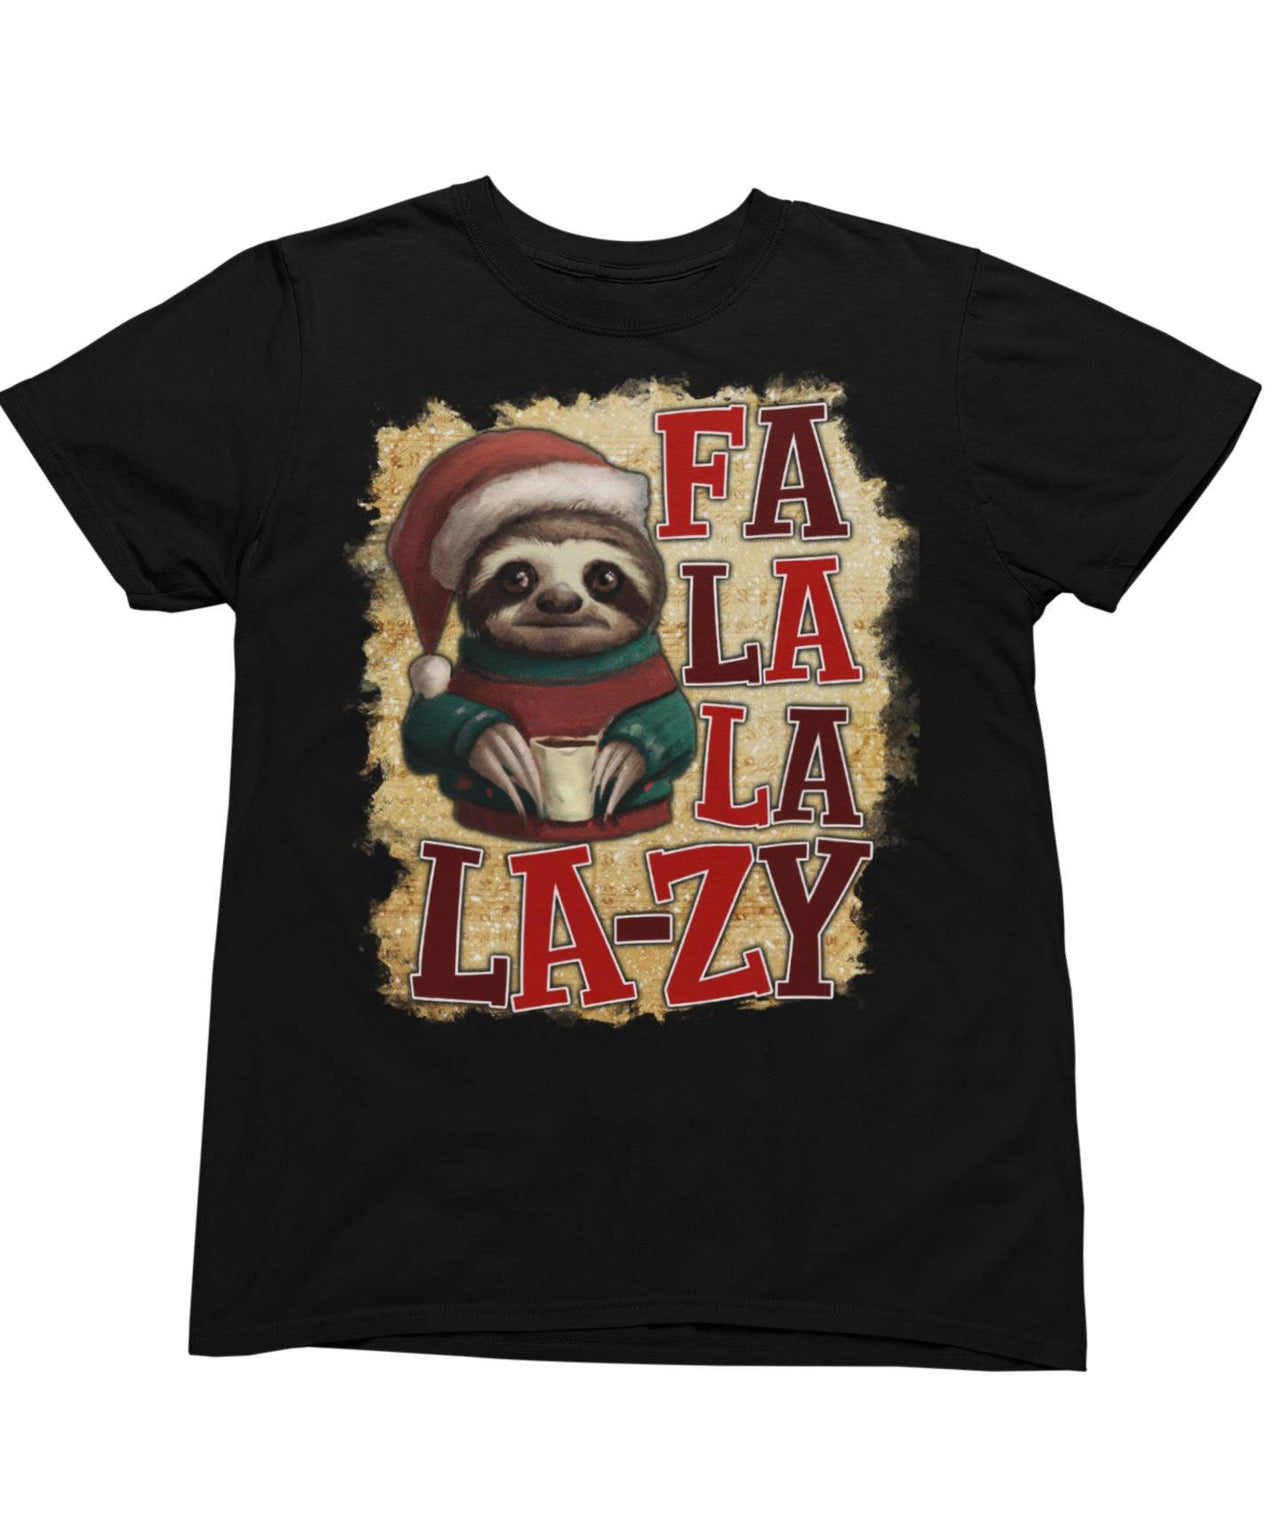 Sloth Fa La La Lazy Christmas Unisex Unisex T-Shirt For Men And Women 8Ball